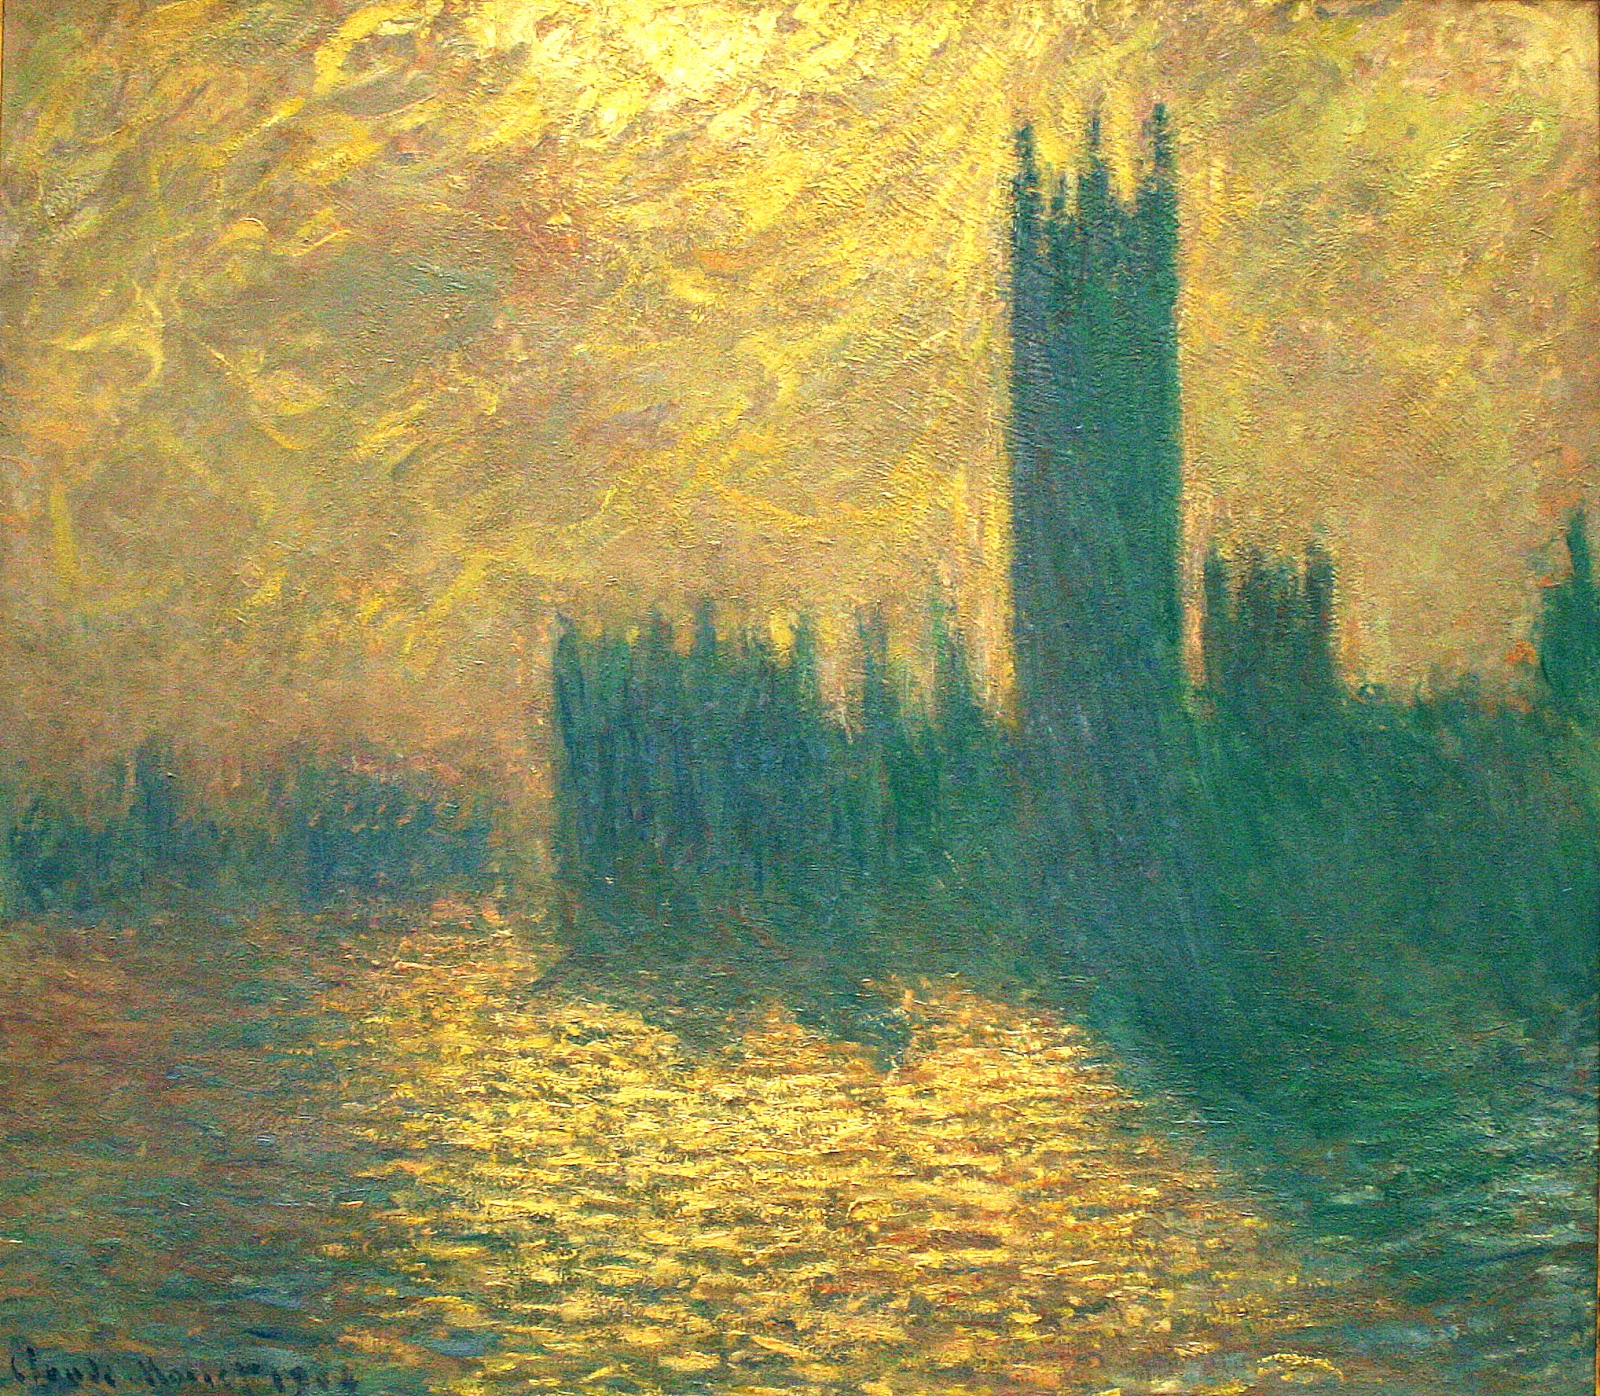 Claude+Monet-1840-1926 (567).jpg